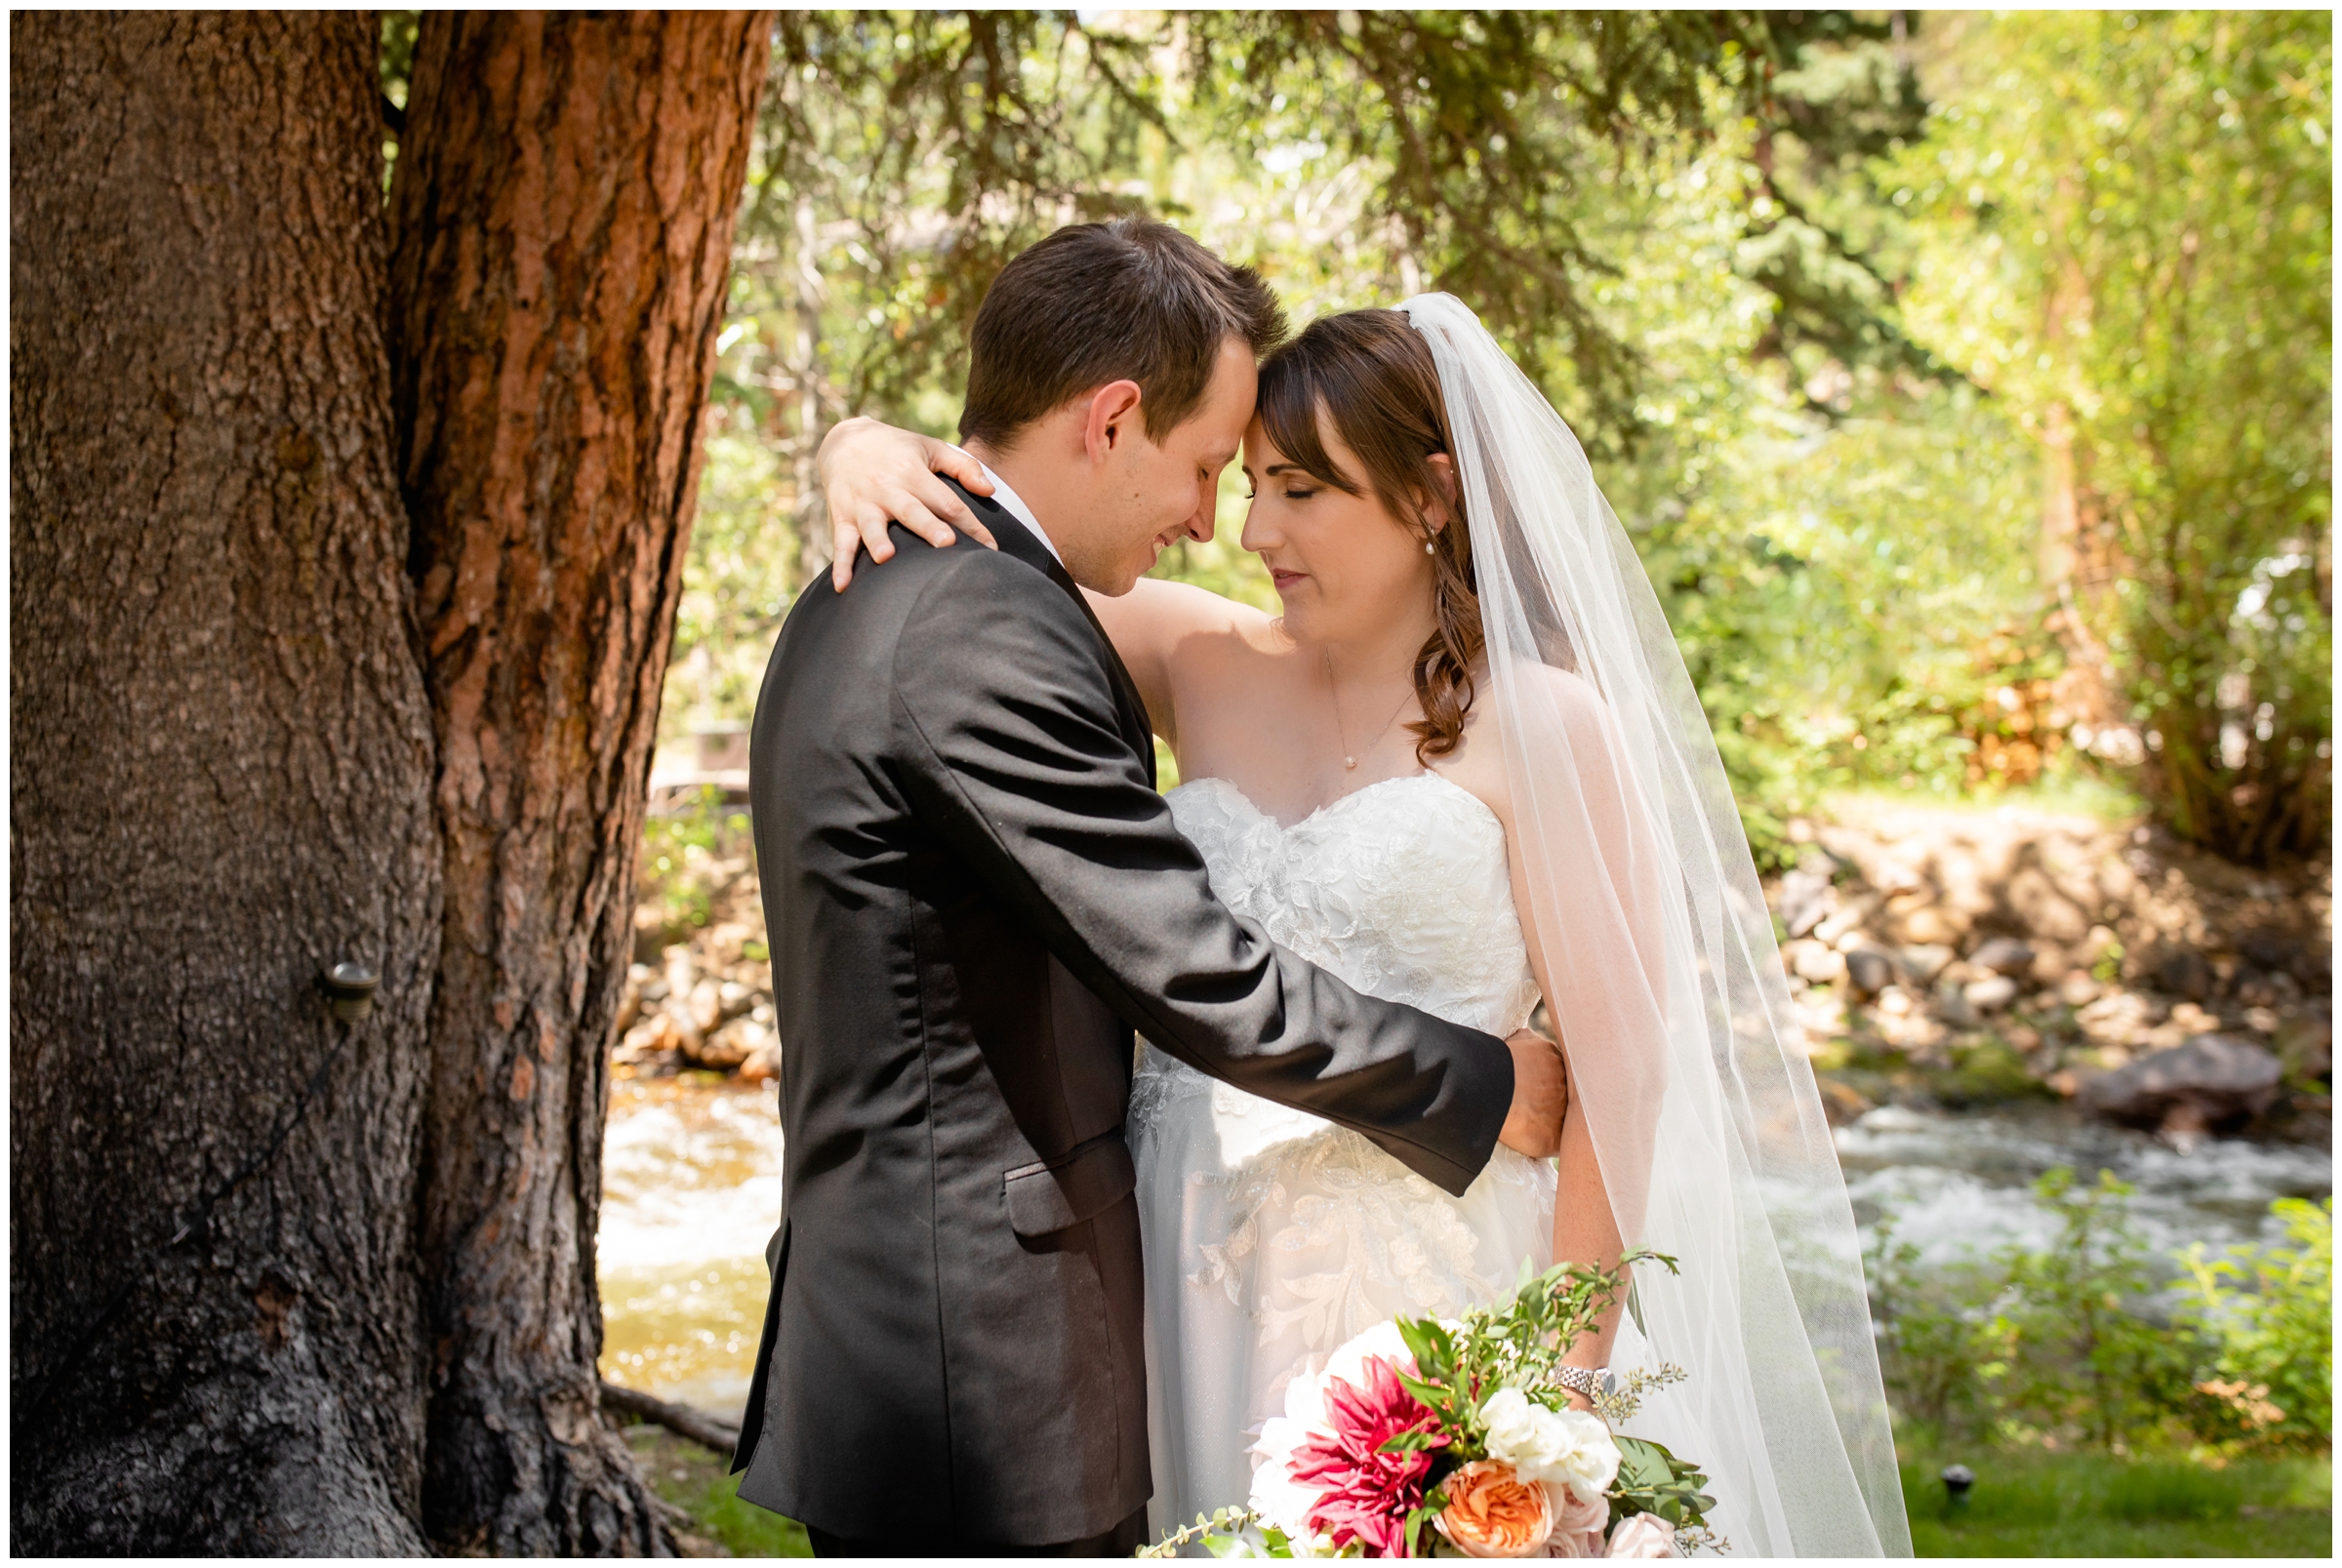 Hermit Park wedding photos during summer by Estes Park mountain photographer Plum Pretty Photography